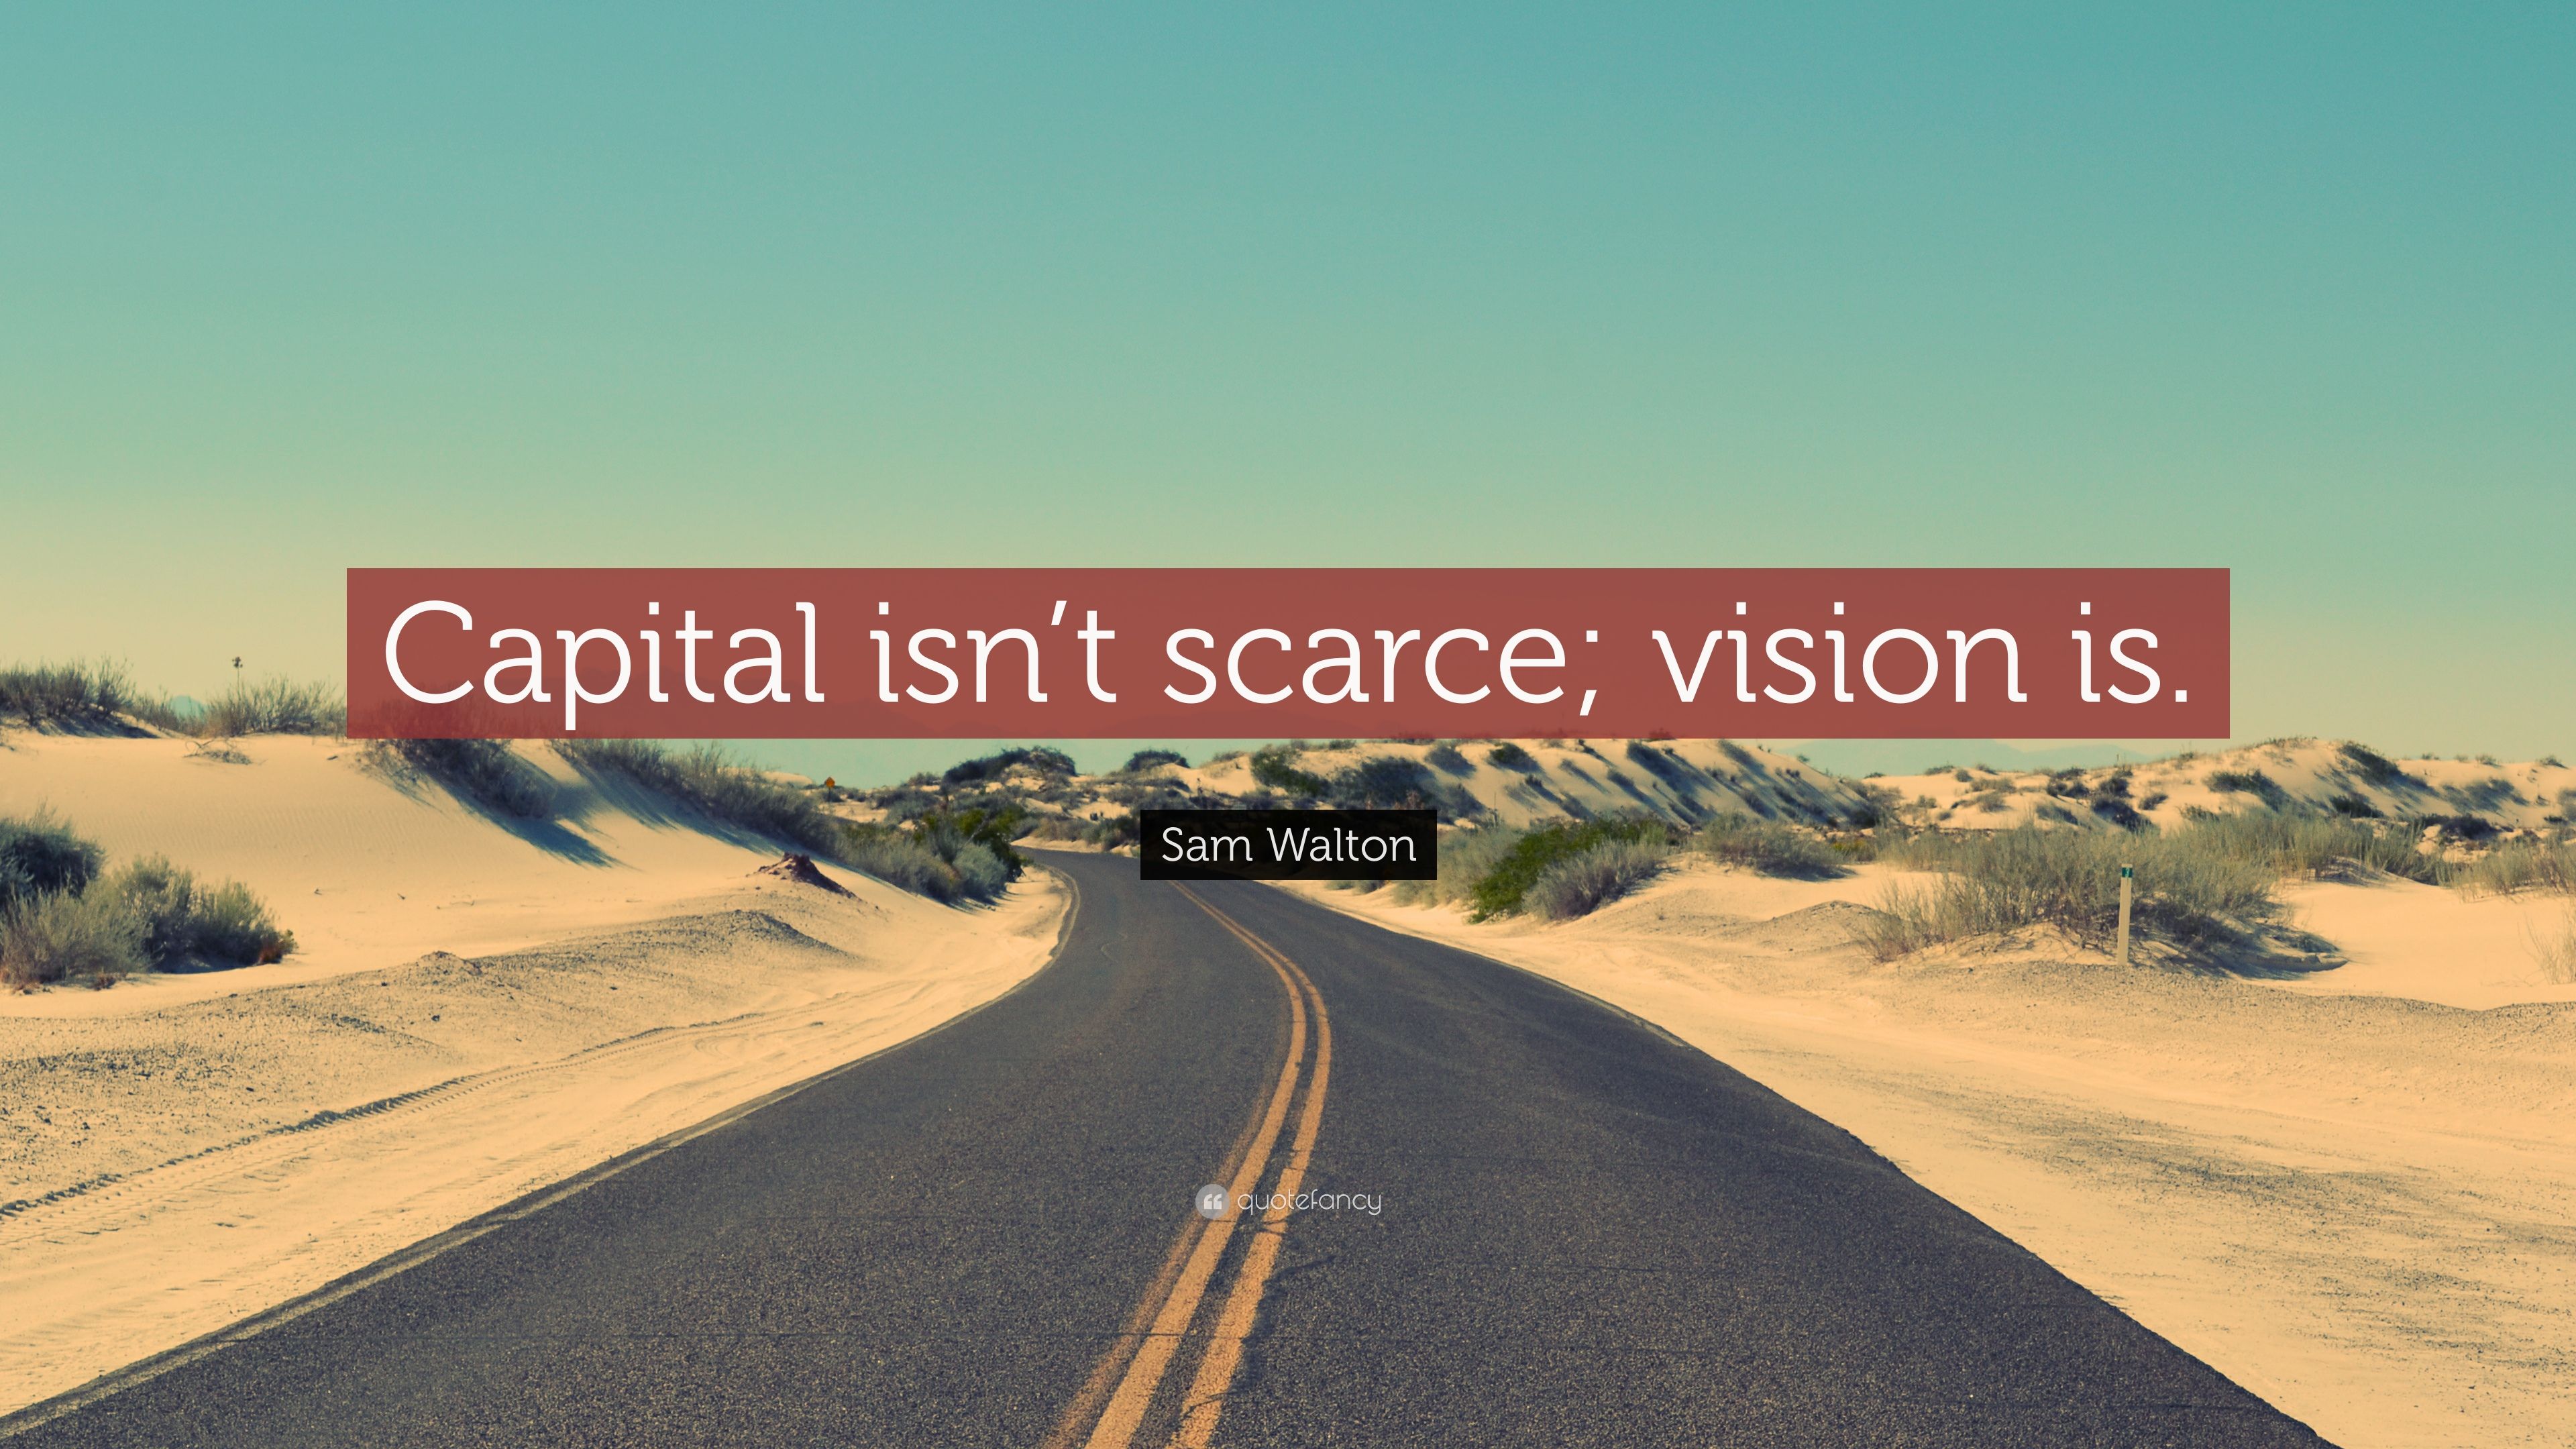 Sam Walton Quote: “Capital isn't scarce; vision is.” 12